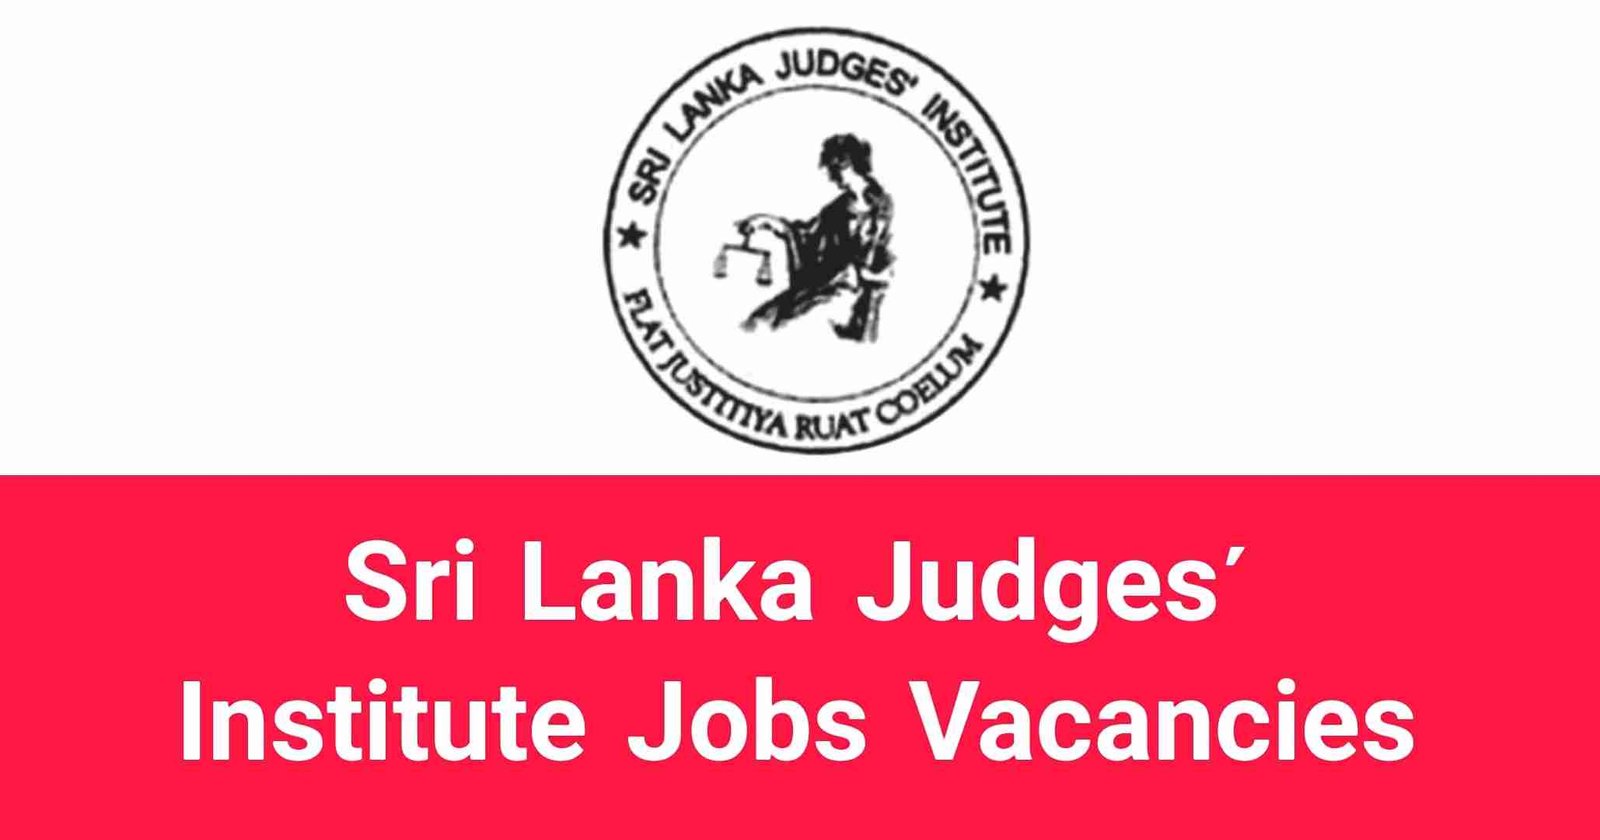 Sri Lanka Judges' Institute Jobs Vacancies